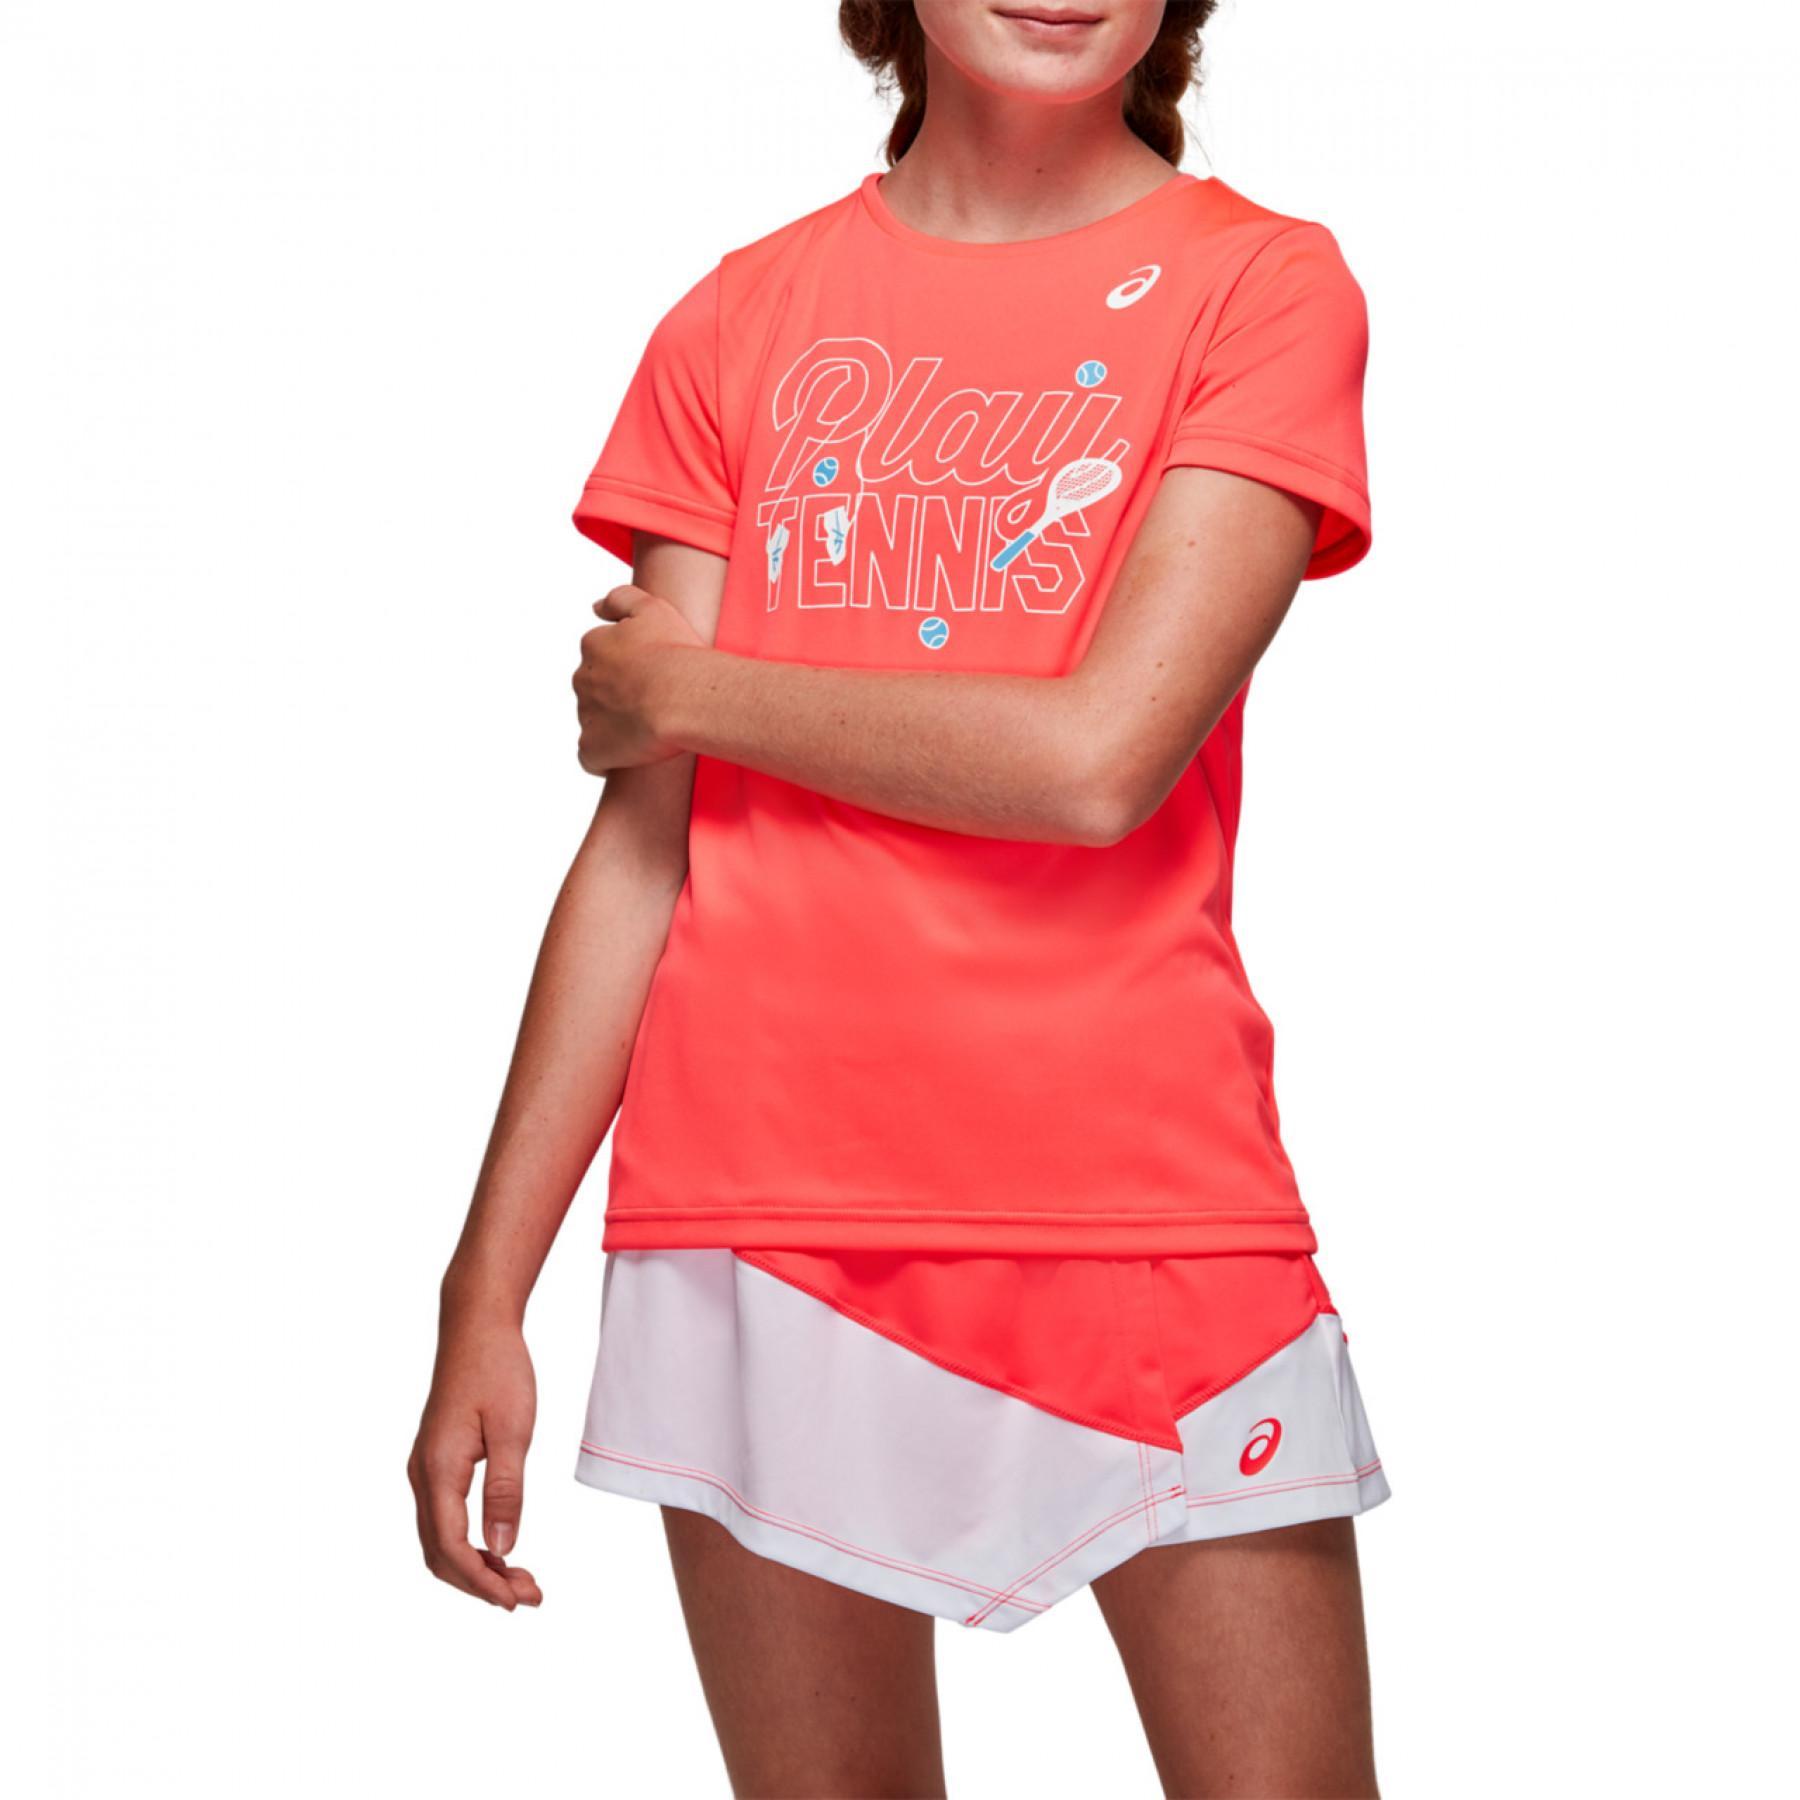 Meisjes-T-shirt Asics Tennis GPX